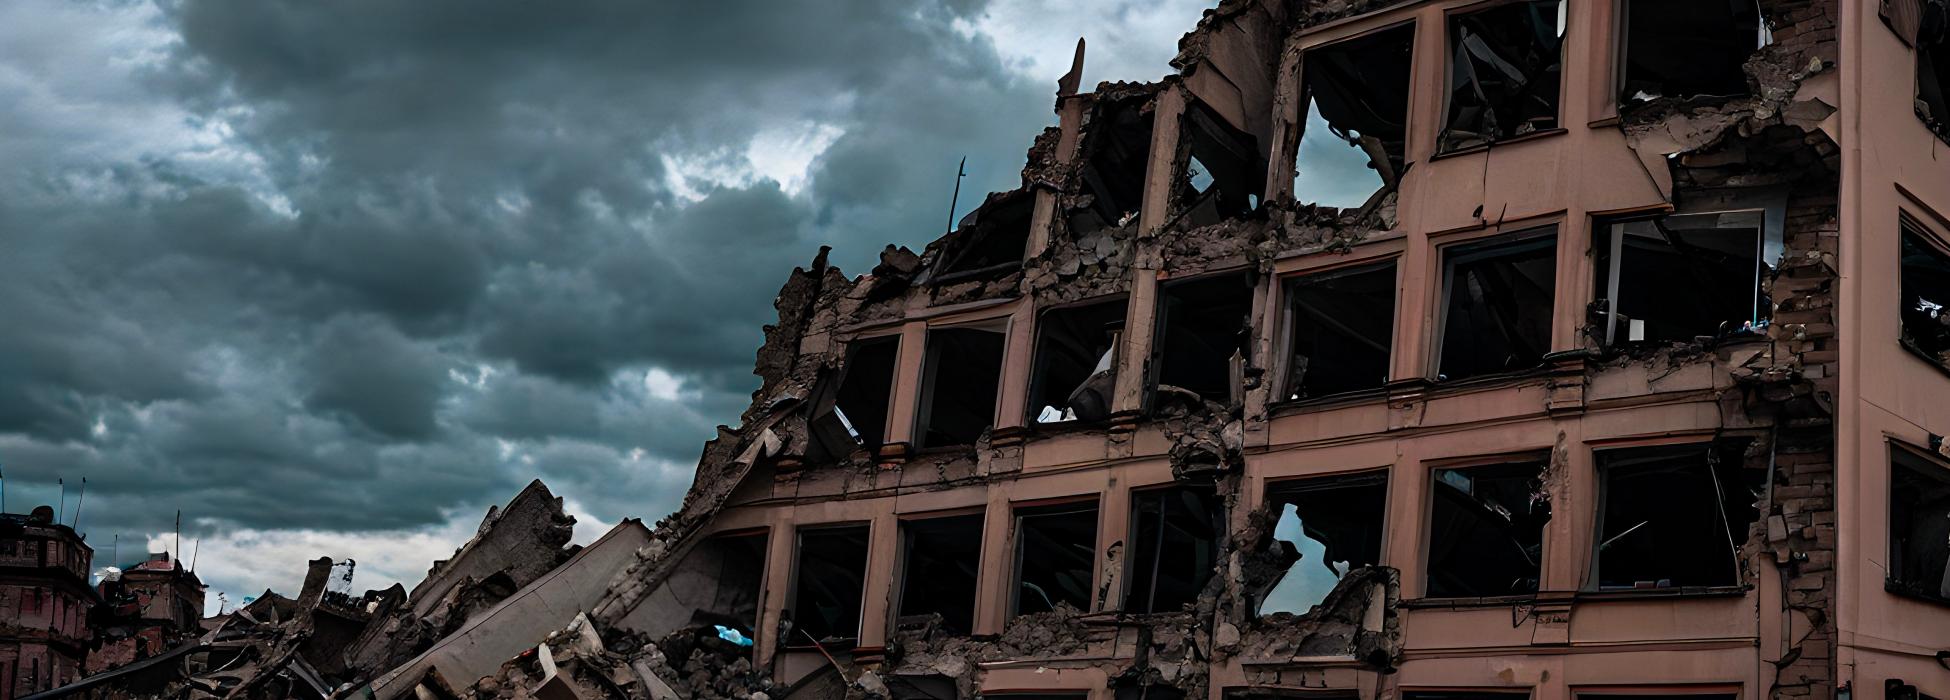 Zertrümmertes Gebäude vor dunkelgrau bewölktem Himmel